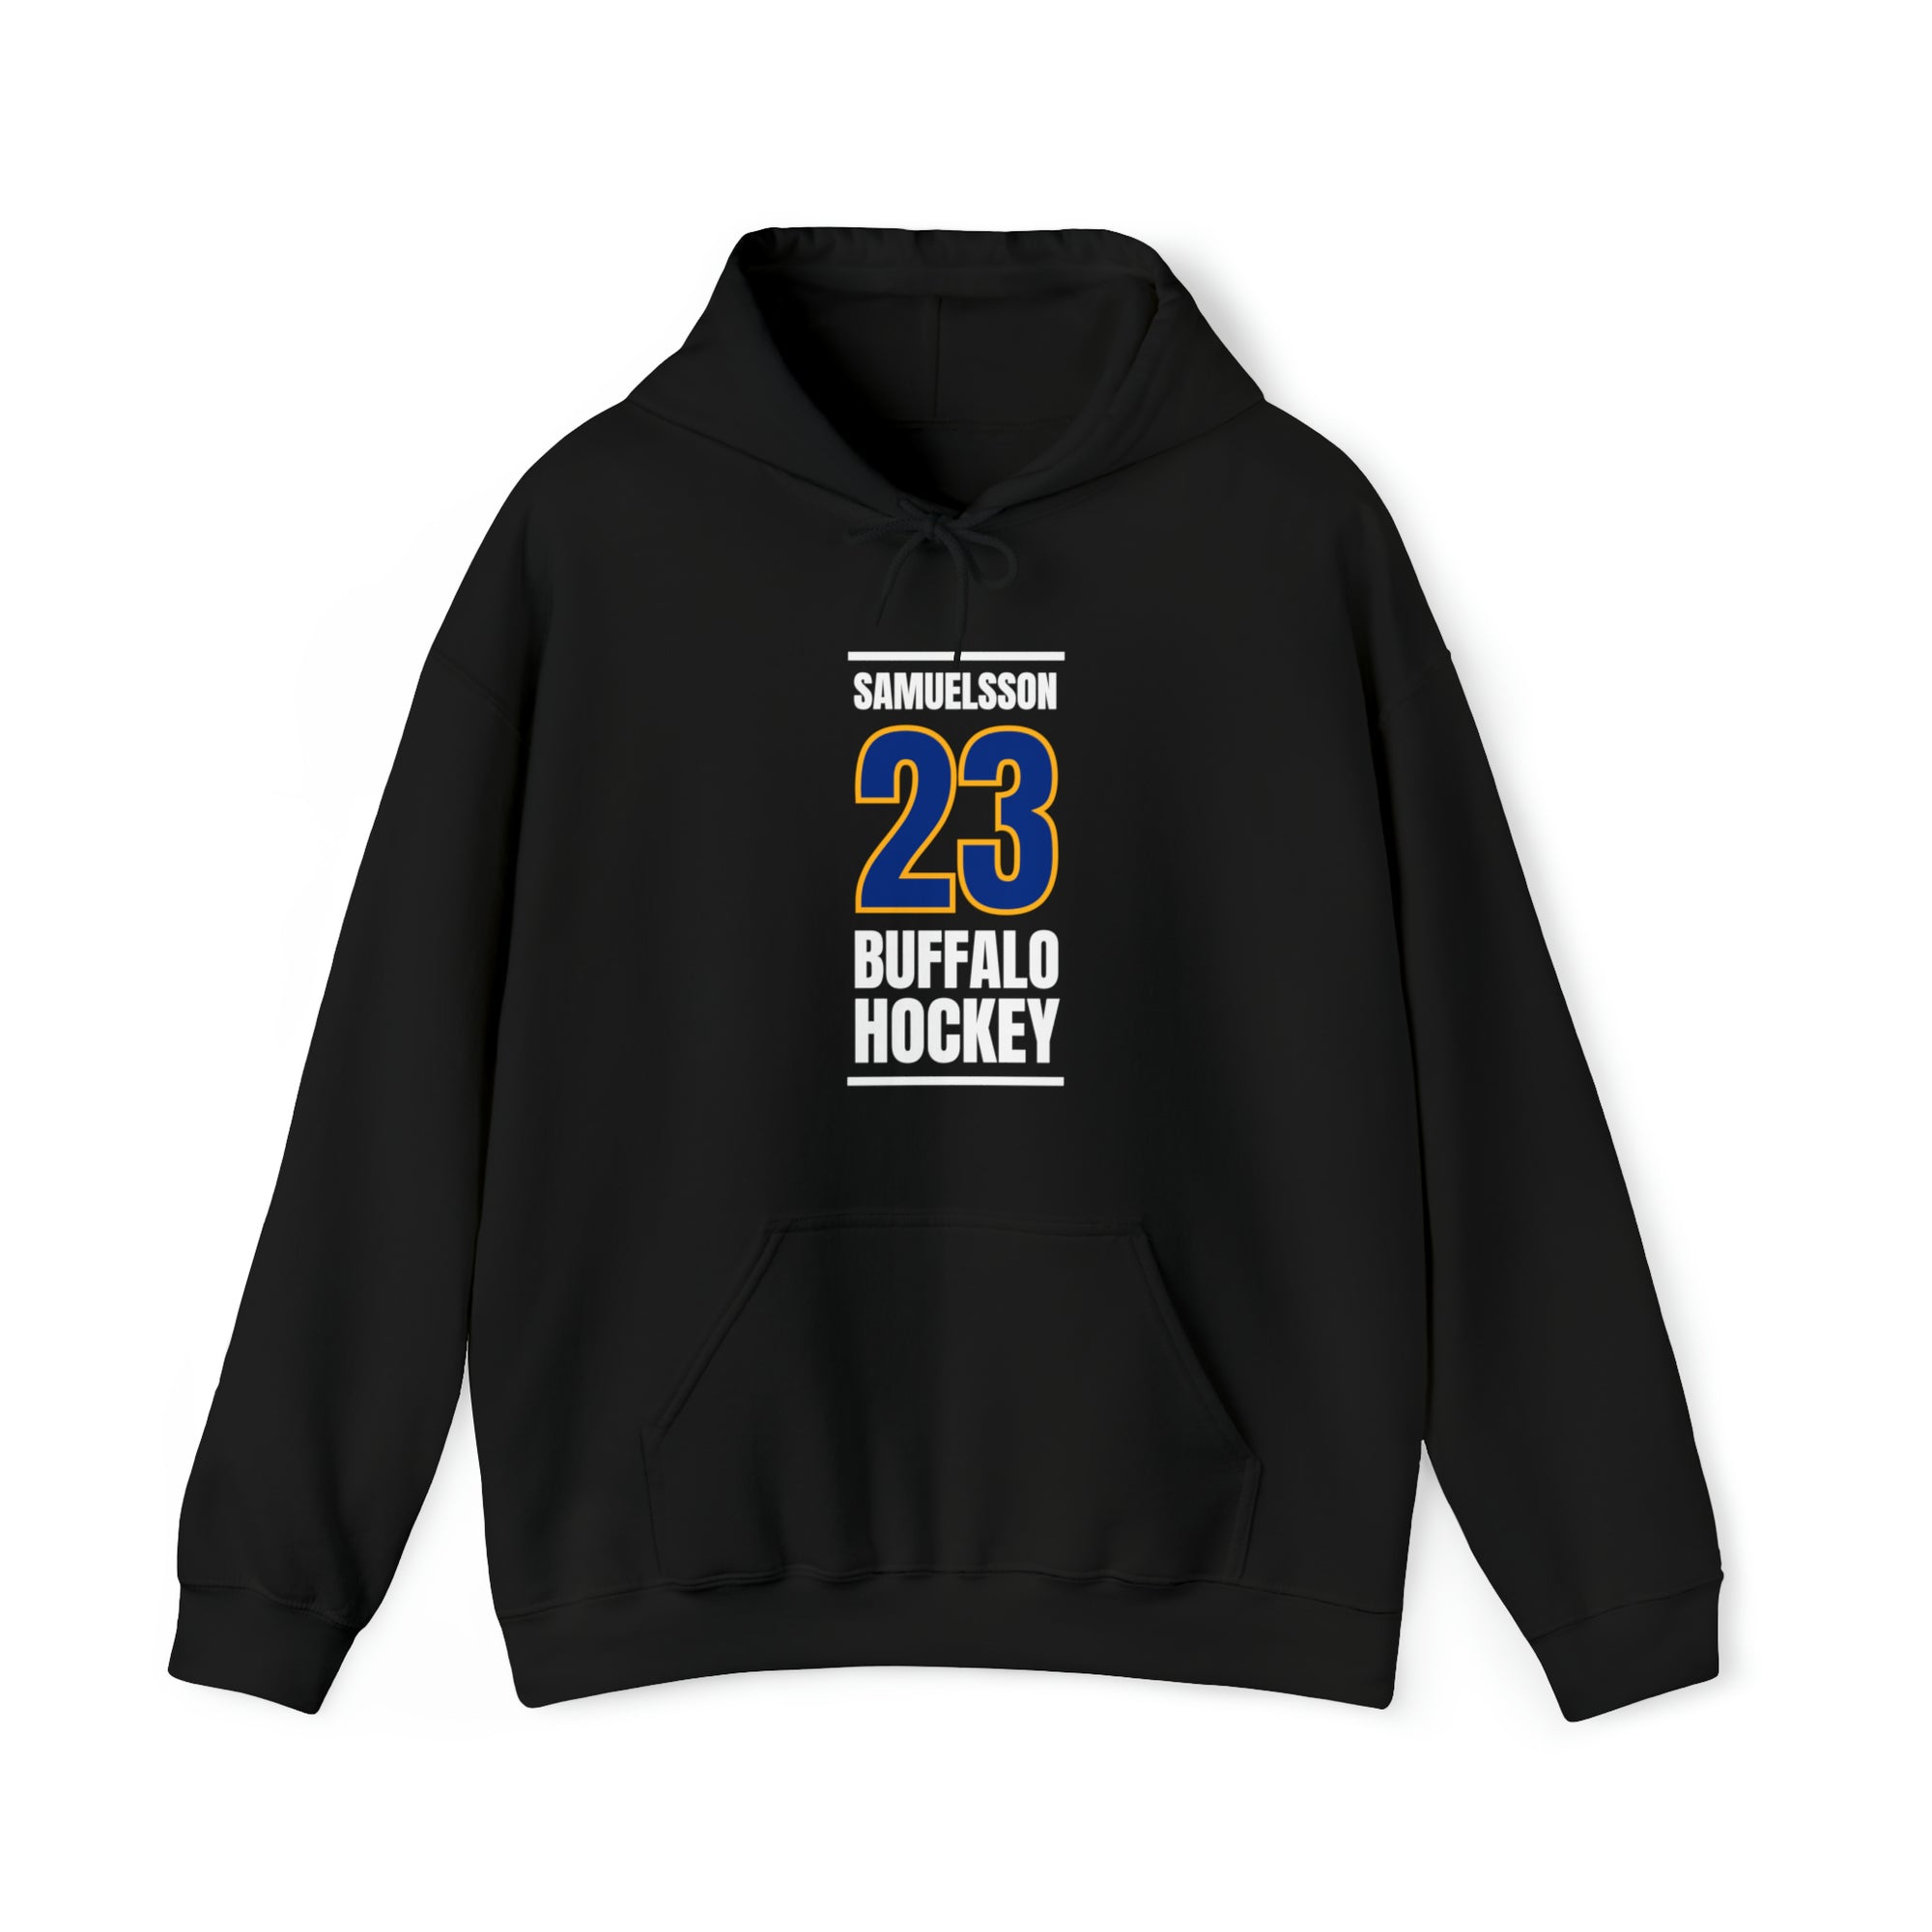 Samuelsson 23 Buffalo Hockey Royal Blue Vertical Design Unisex Hooded Sweatshirt